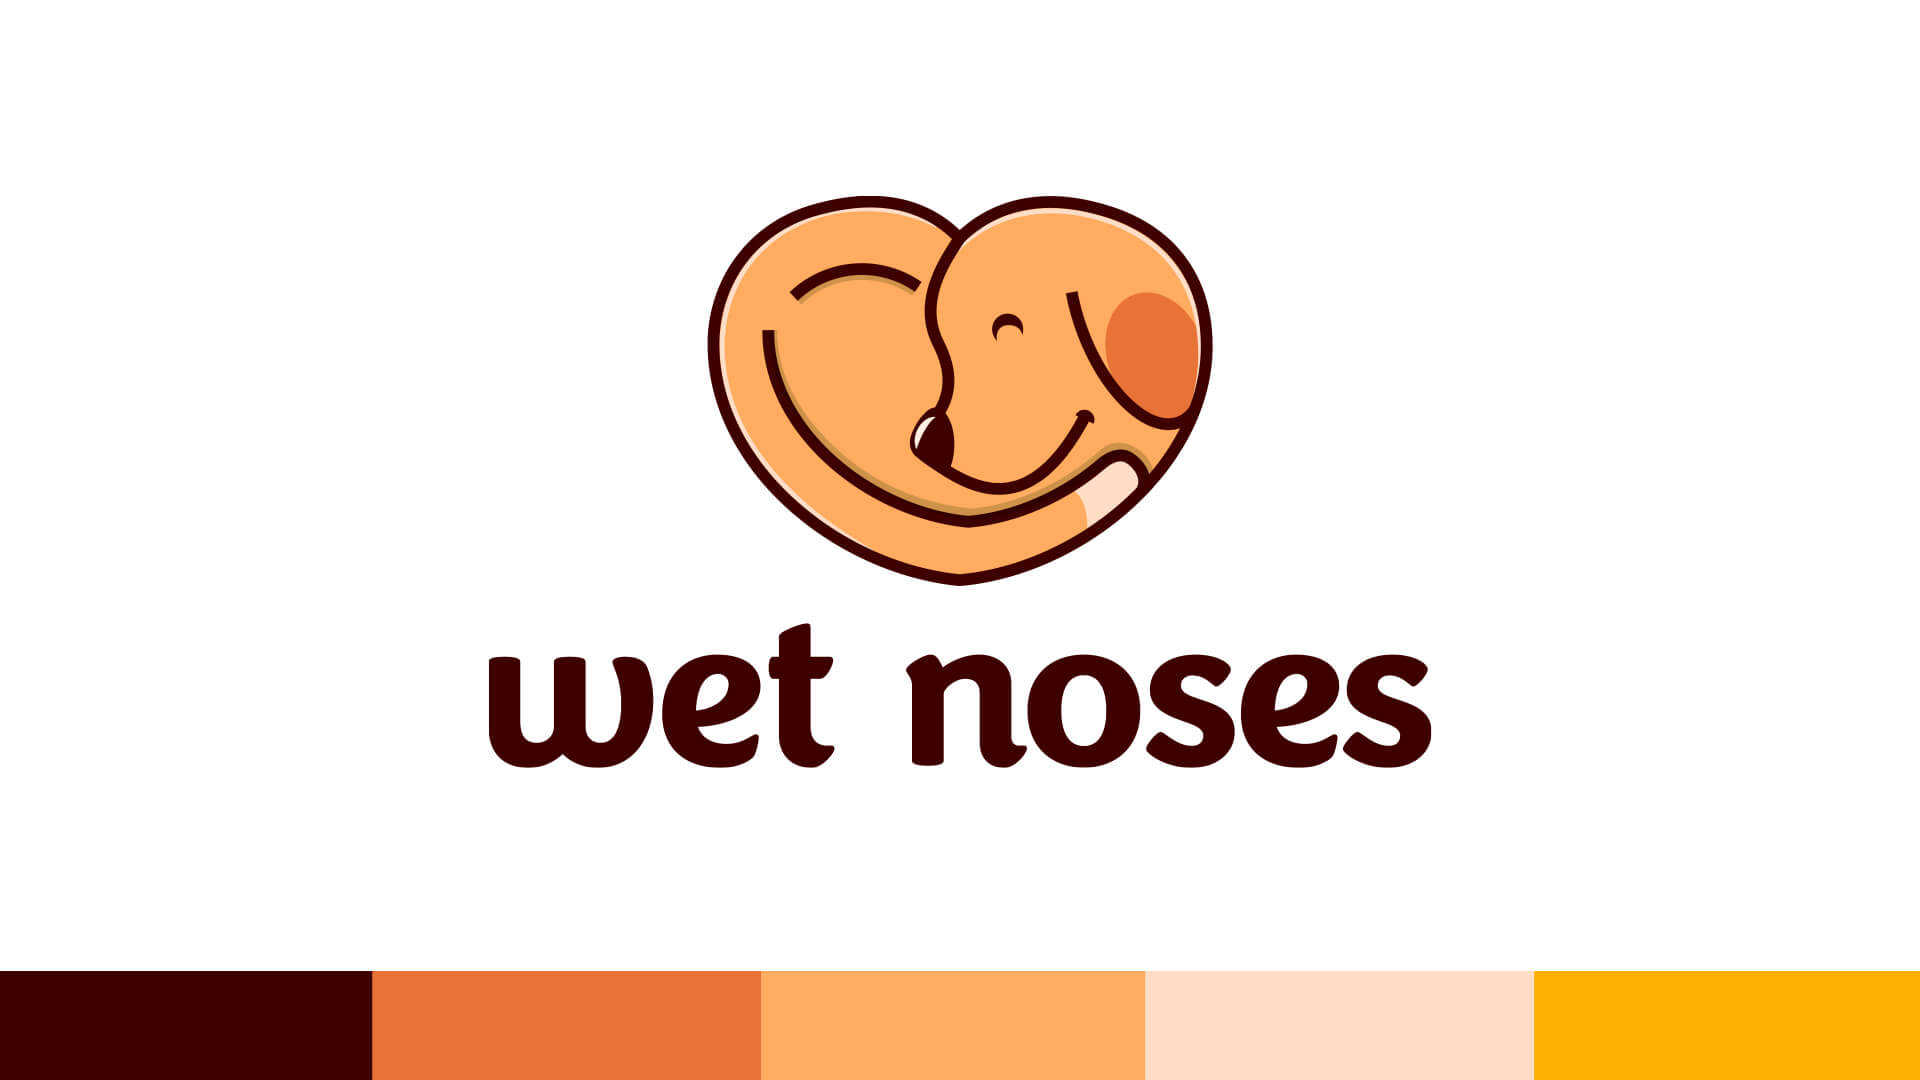 https://alinemedeiros.com/wp-content/uploads/2023/02/wet-noses-logo.jpg